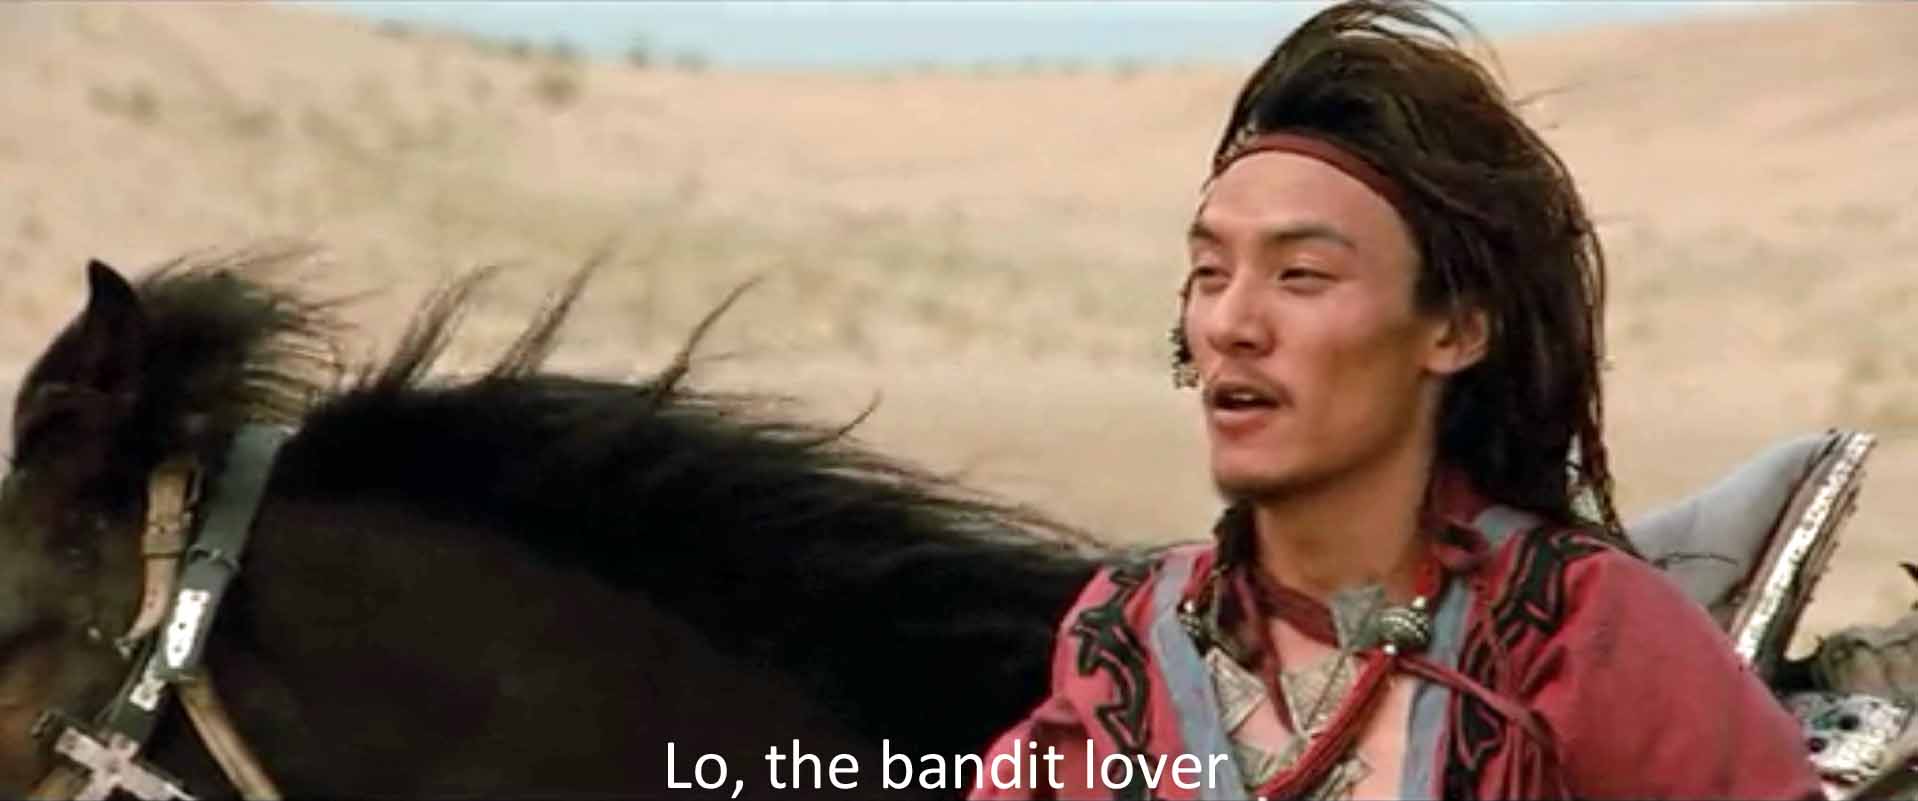 Lo, the bandit lover